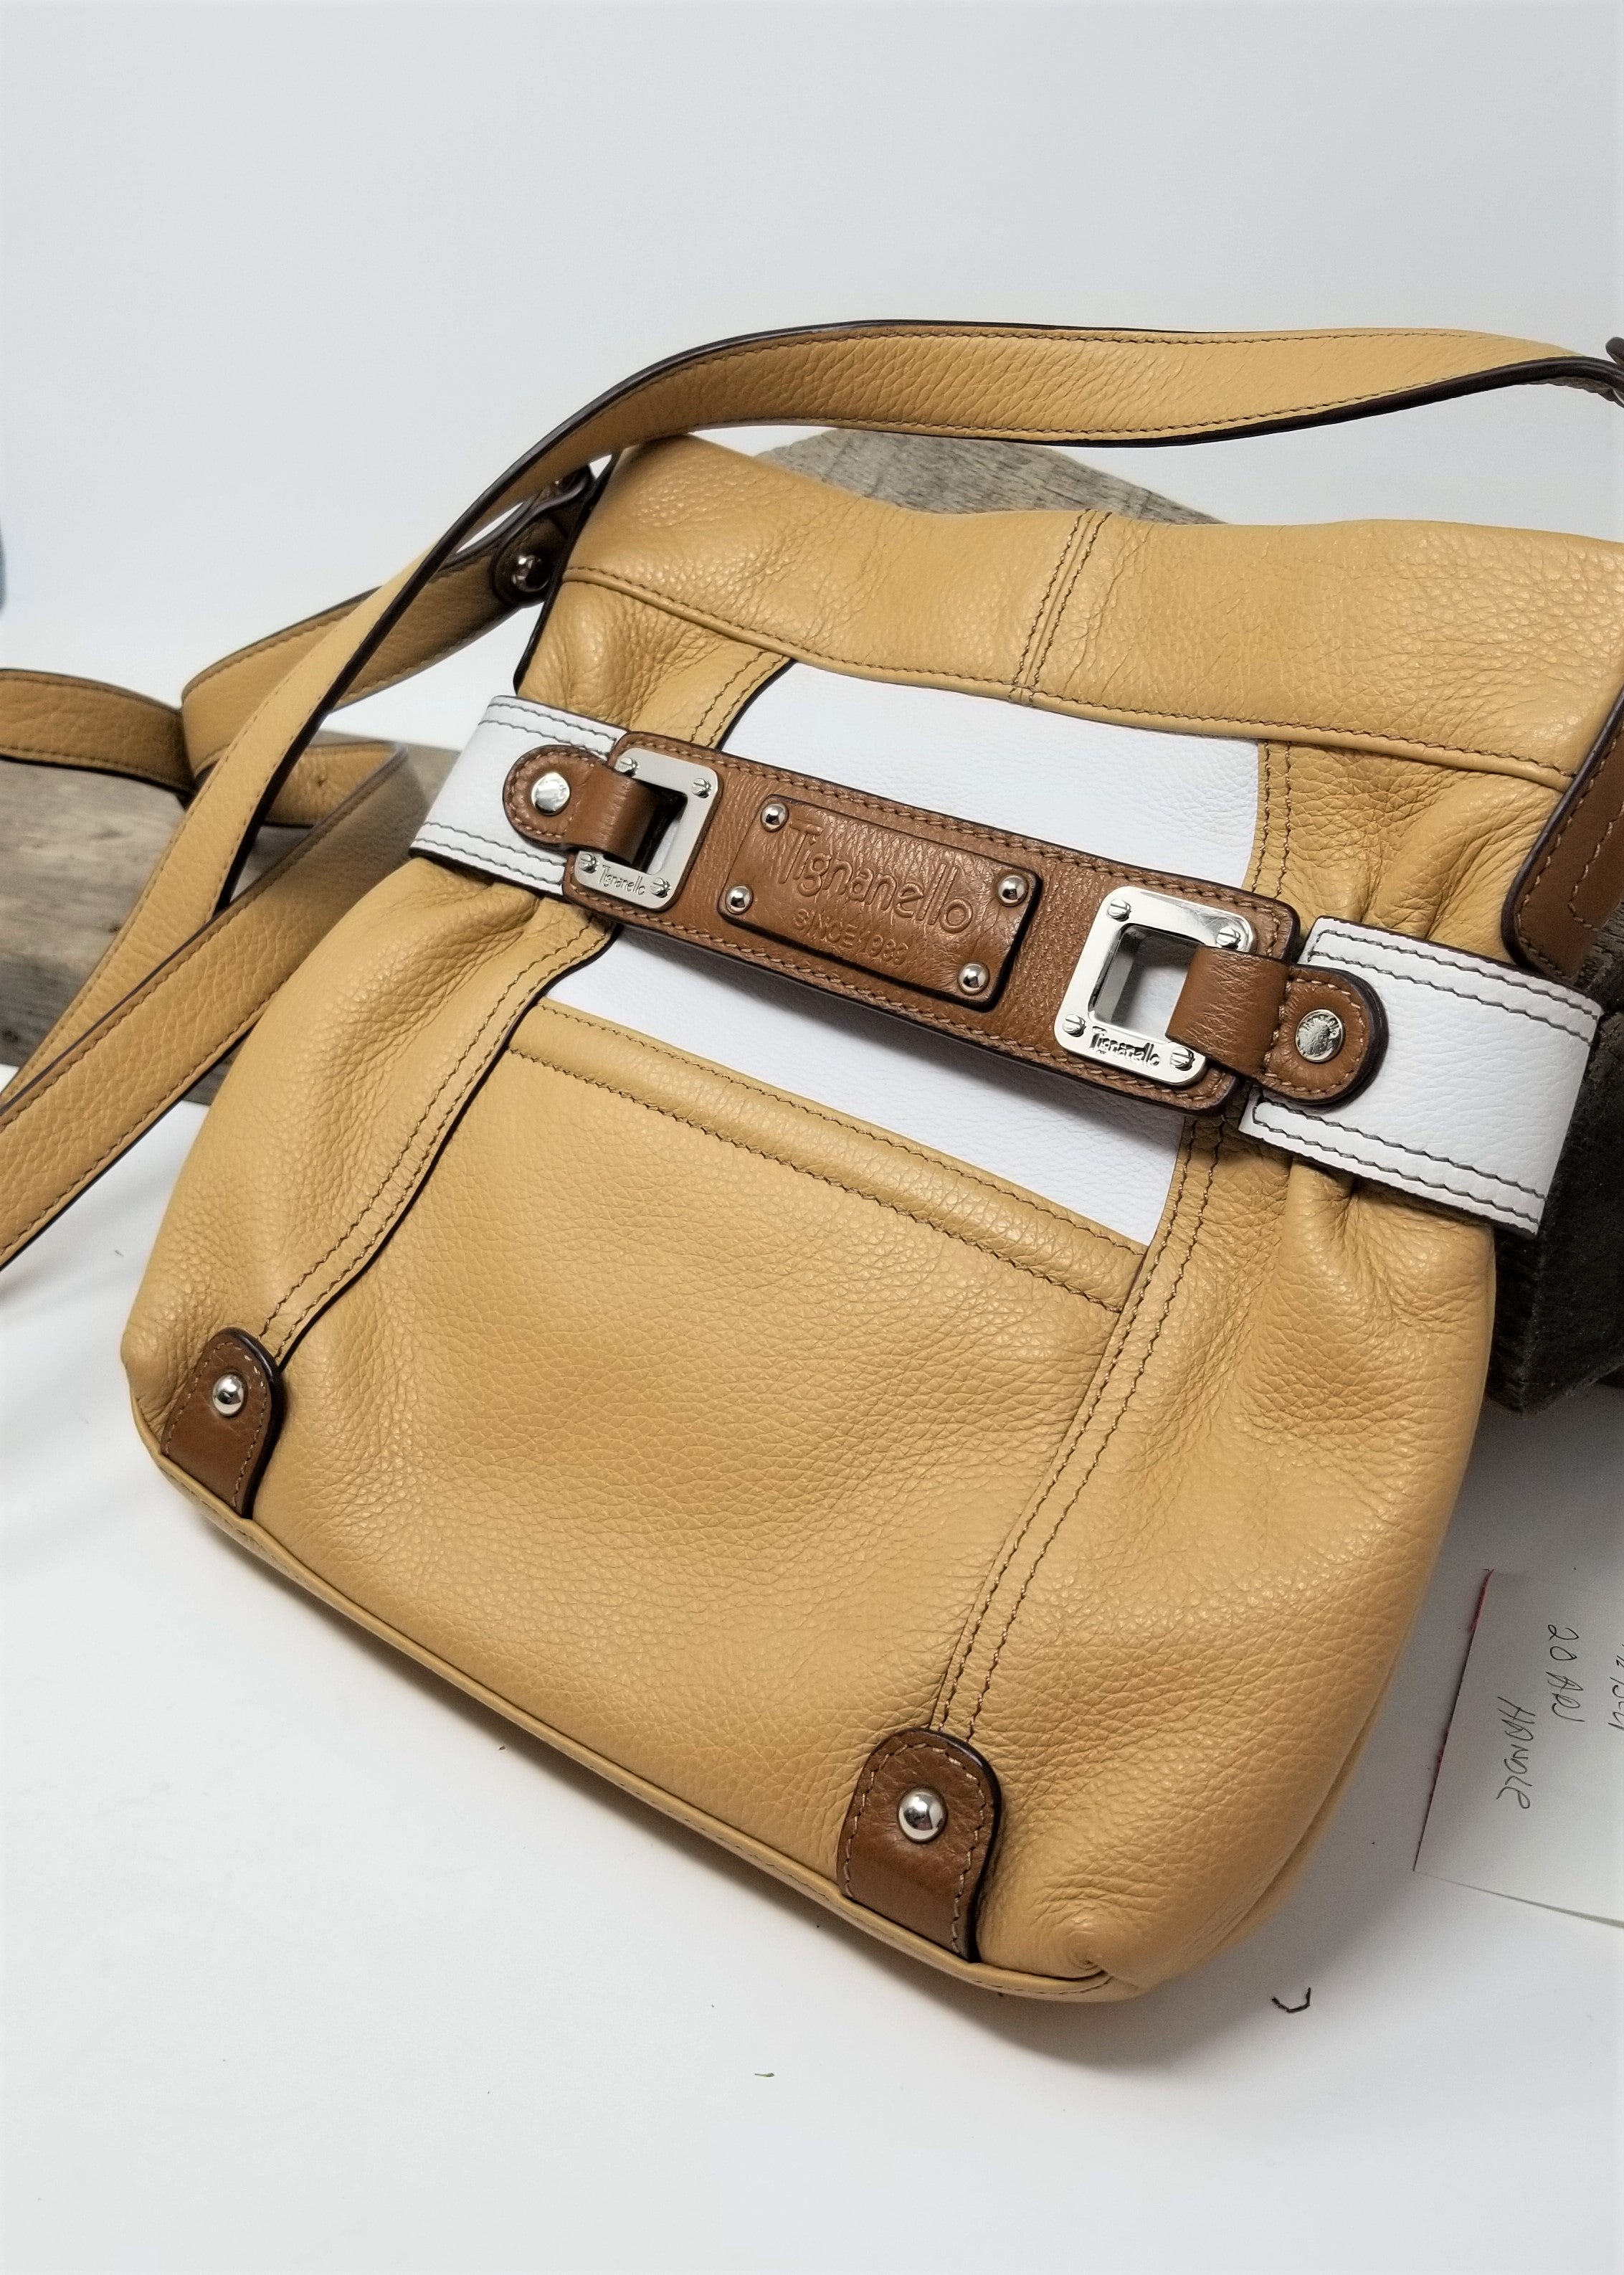 Tignanello White Pebble 100% Genuine Leather Handbag/Purse Multi Pockets  Large | eBay